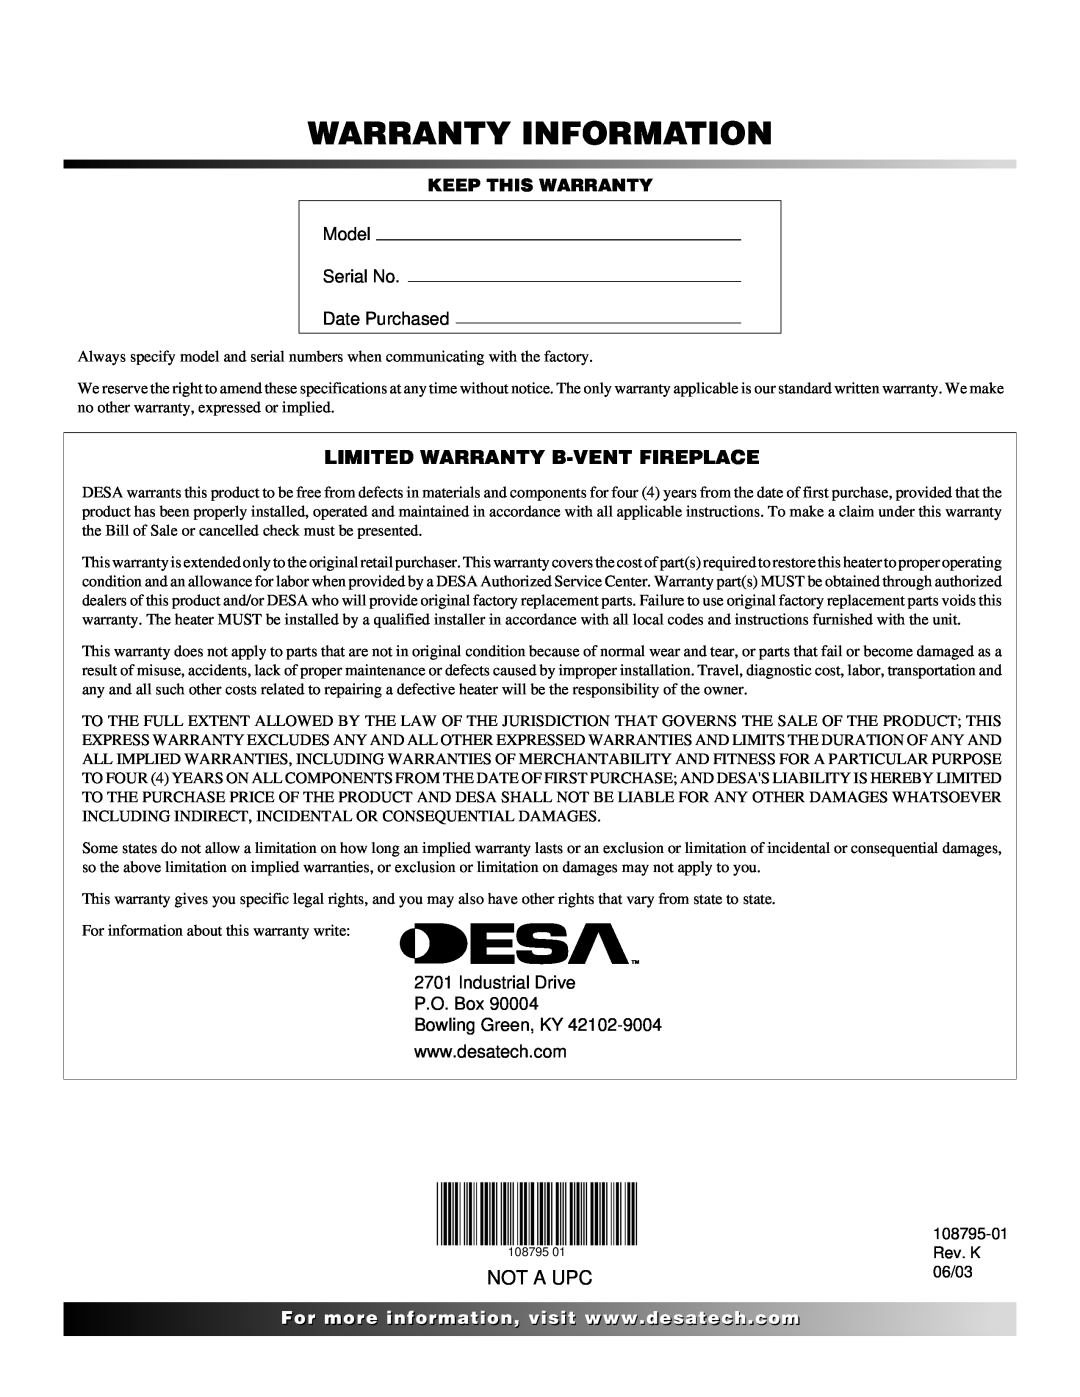 Desa AND VM42 installation manual Warranty Information, Limited Warranty B-Ventfireplace, Not A Upc, Keep This Warranty 